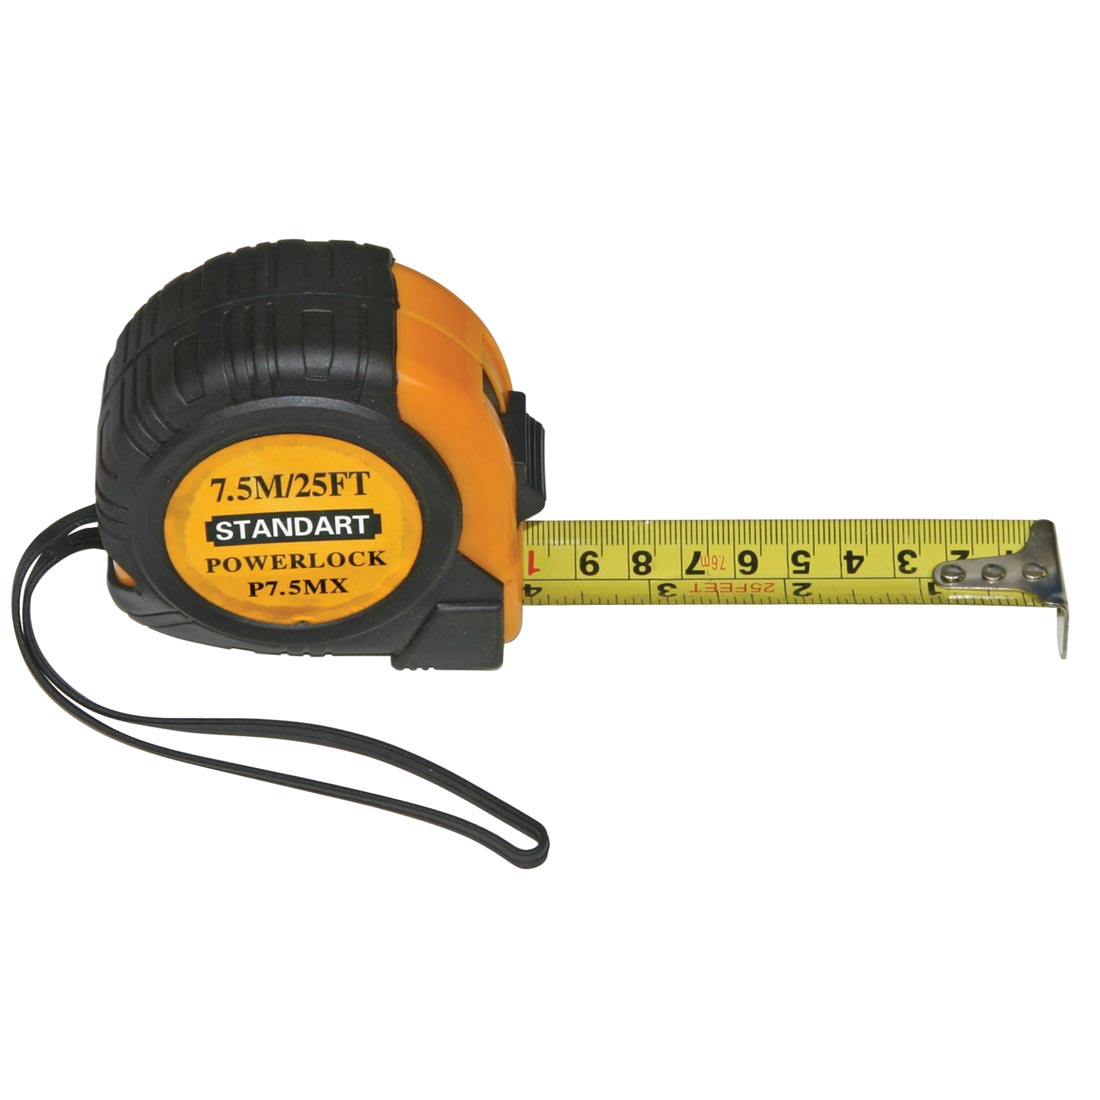 Standart Powerlock Measuring Tape